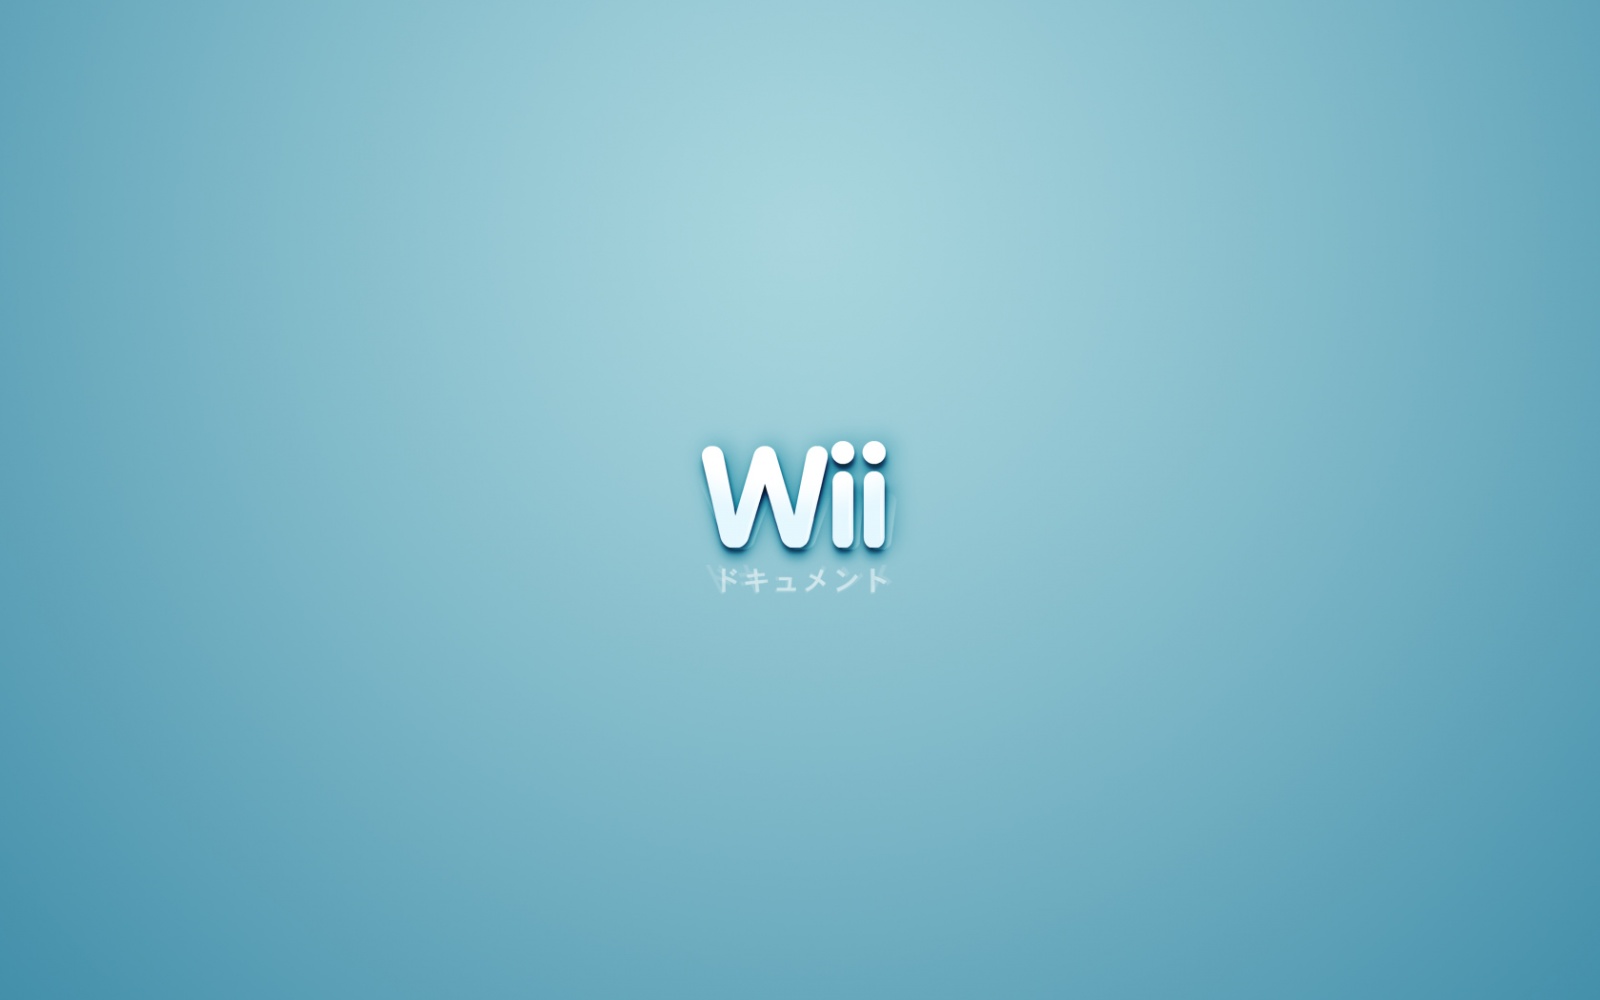 Wii menu wallpaper for iPhone X  rwii